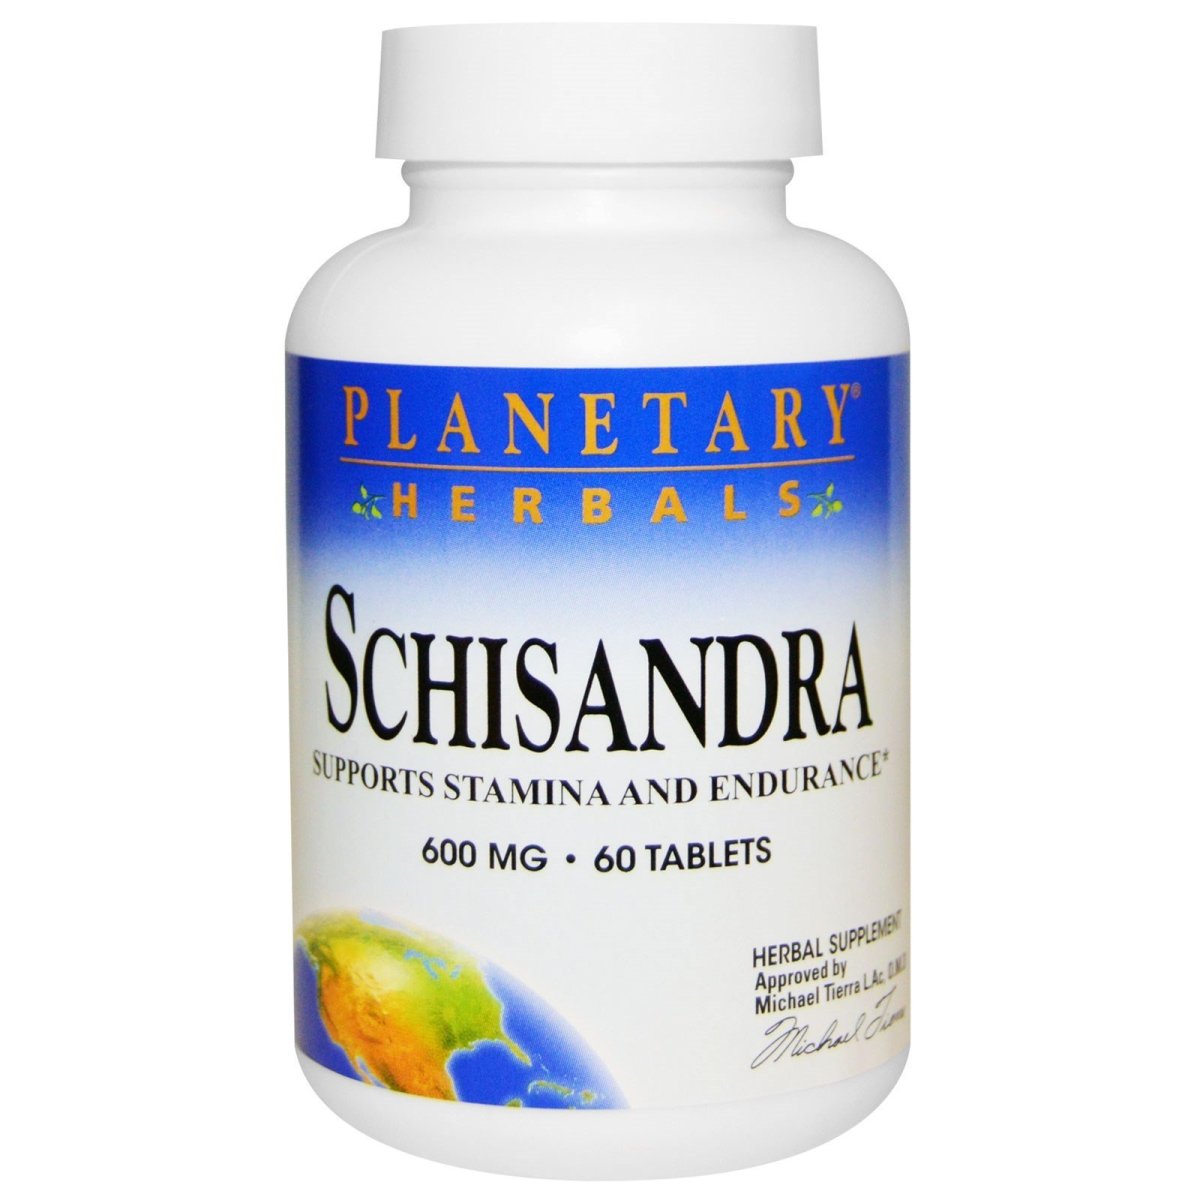 Schisandra - Stamina and Endurance - 600mg - 60 Tablets